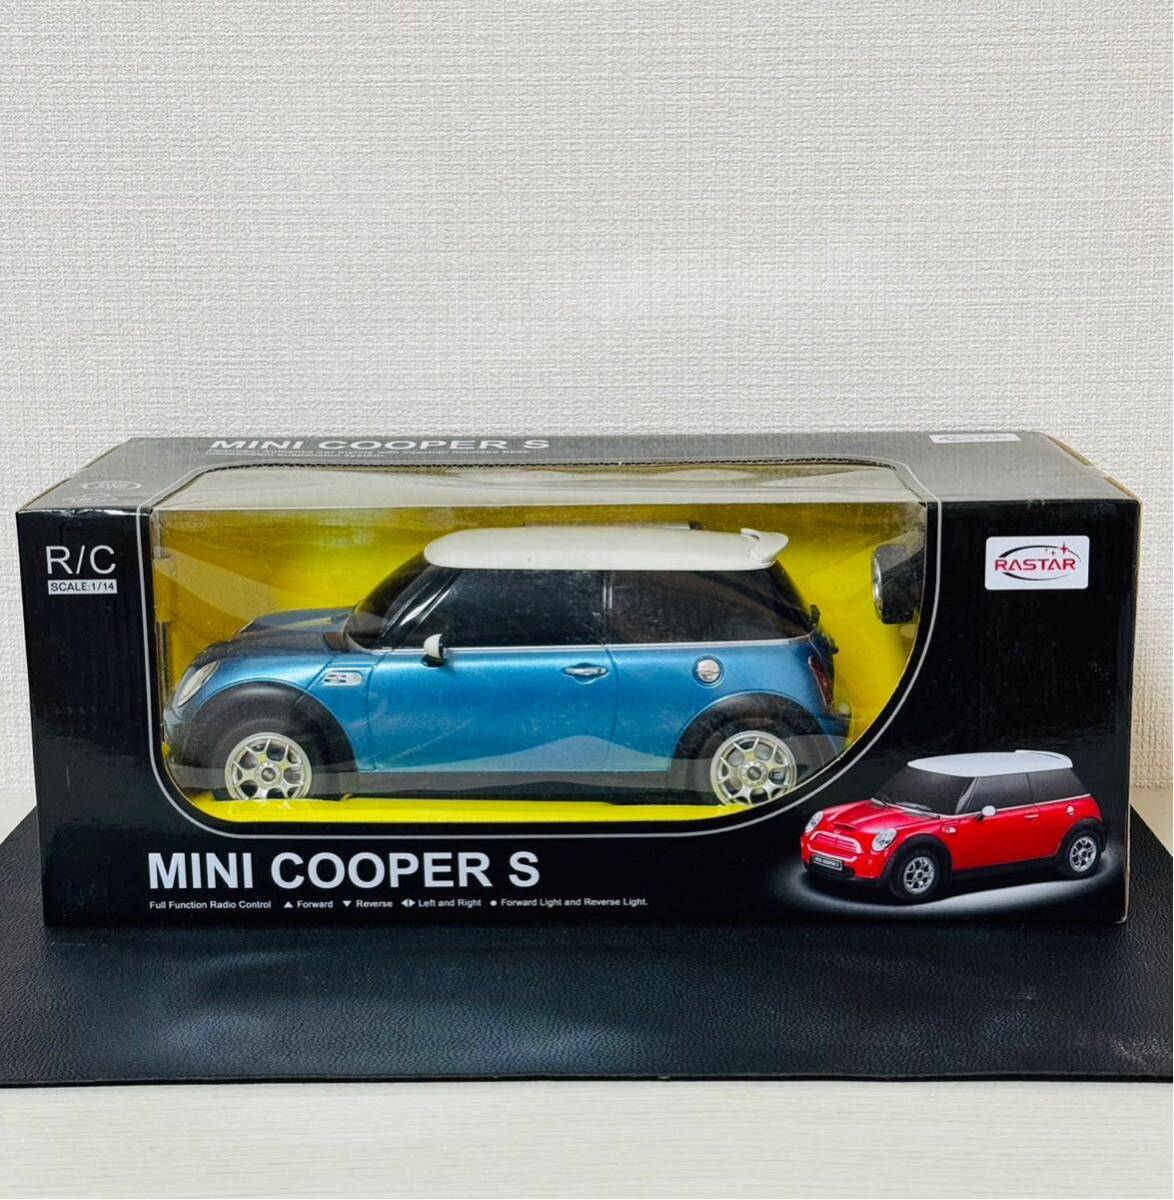 Mini Cooper S Radio Control 1/14 Радиоконнигание автомобиль